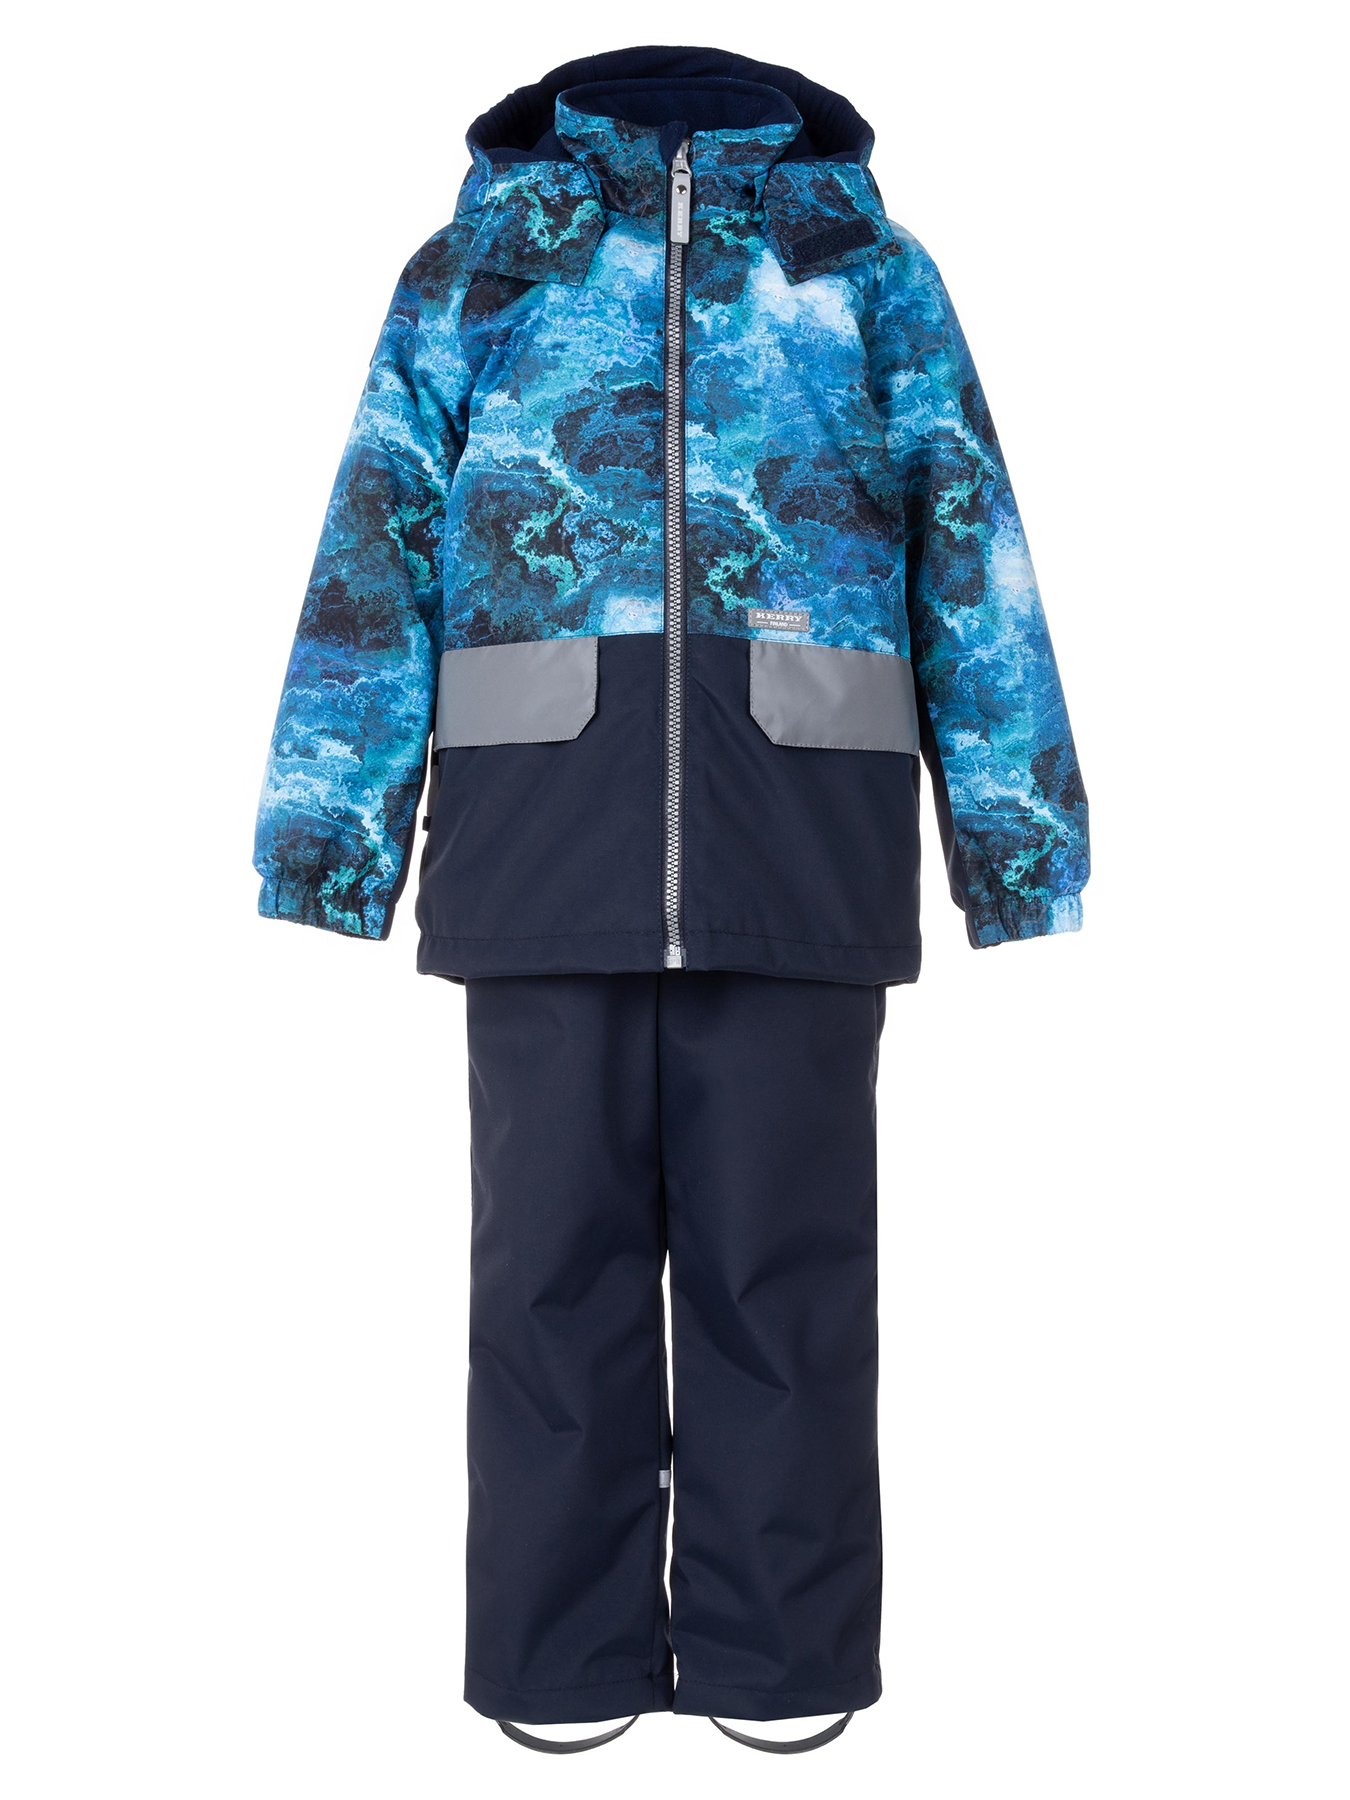 Комплект верхней одежды KERRY TOMI K24030, 6310-синий с рисунком,темно-синий, 116 кронштейн vivanco 25653 mf 6310 наклонный vesa 800